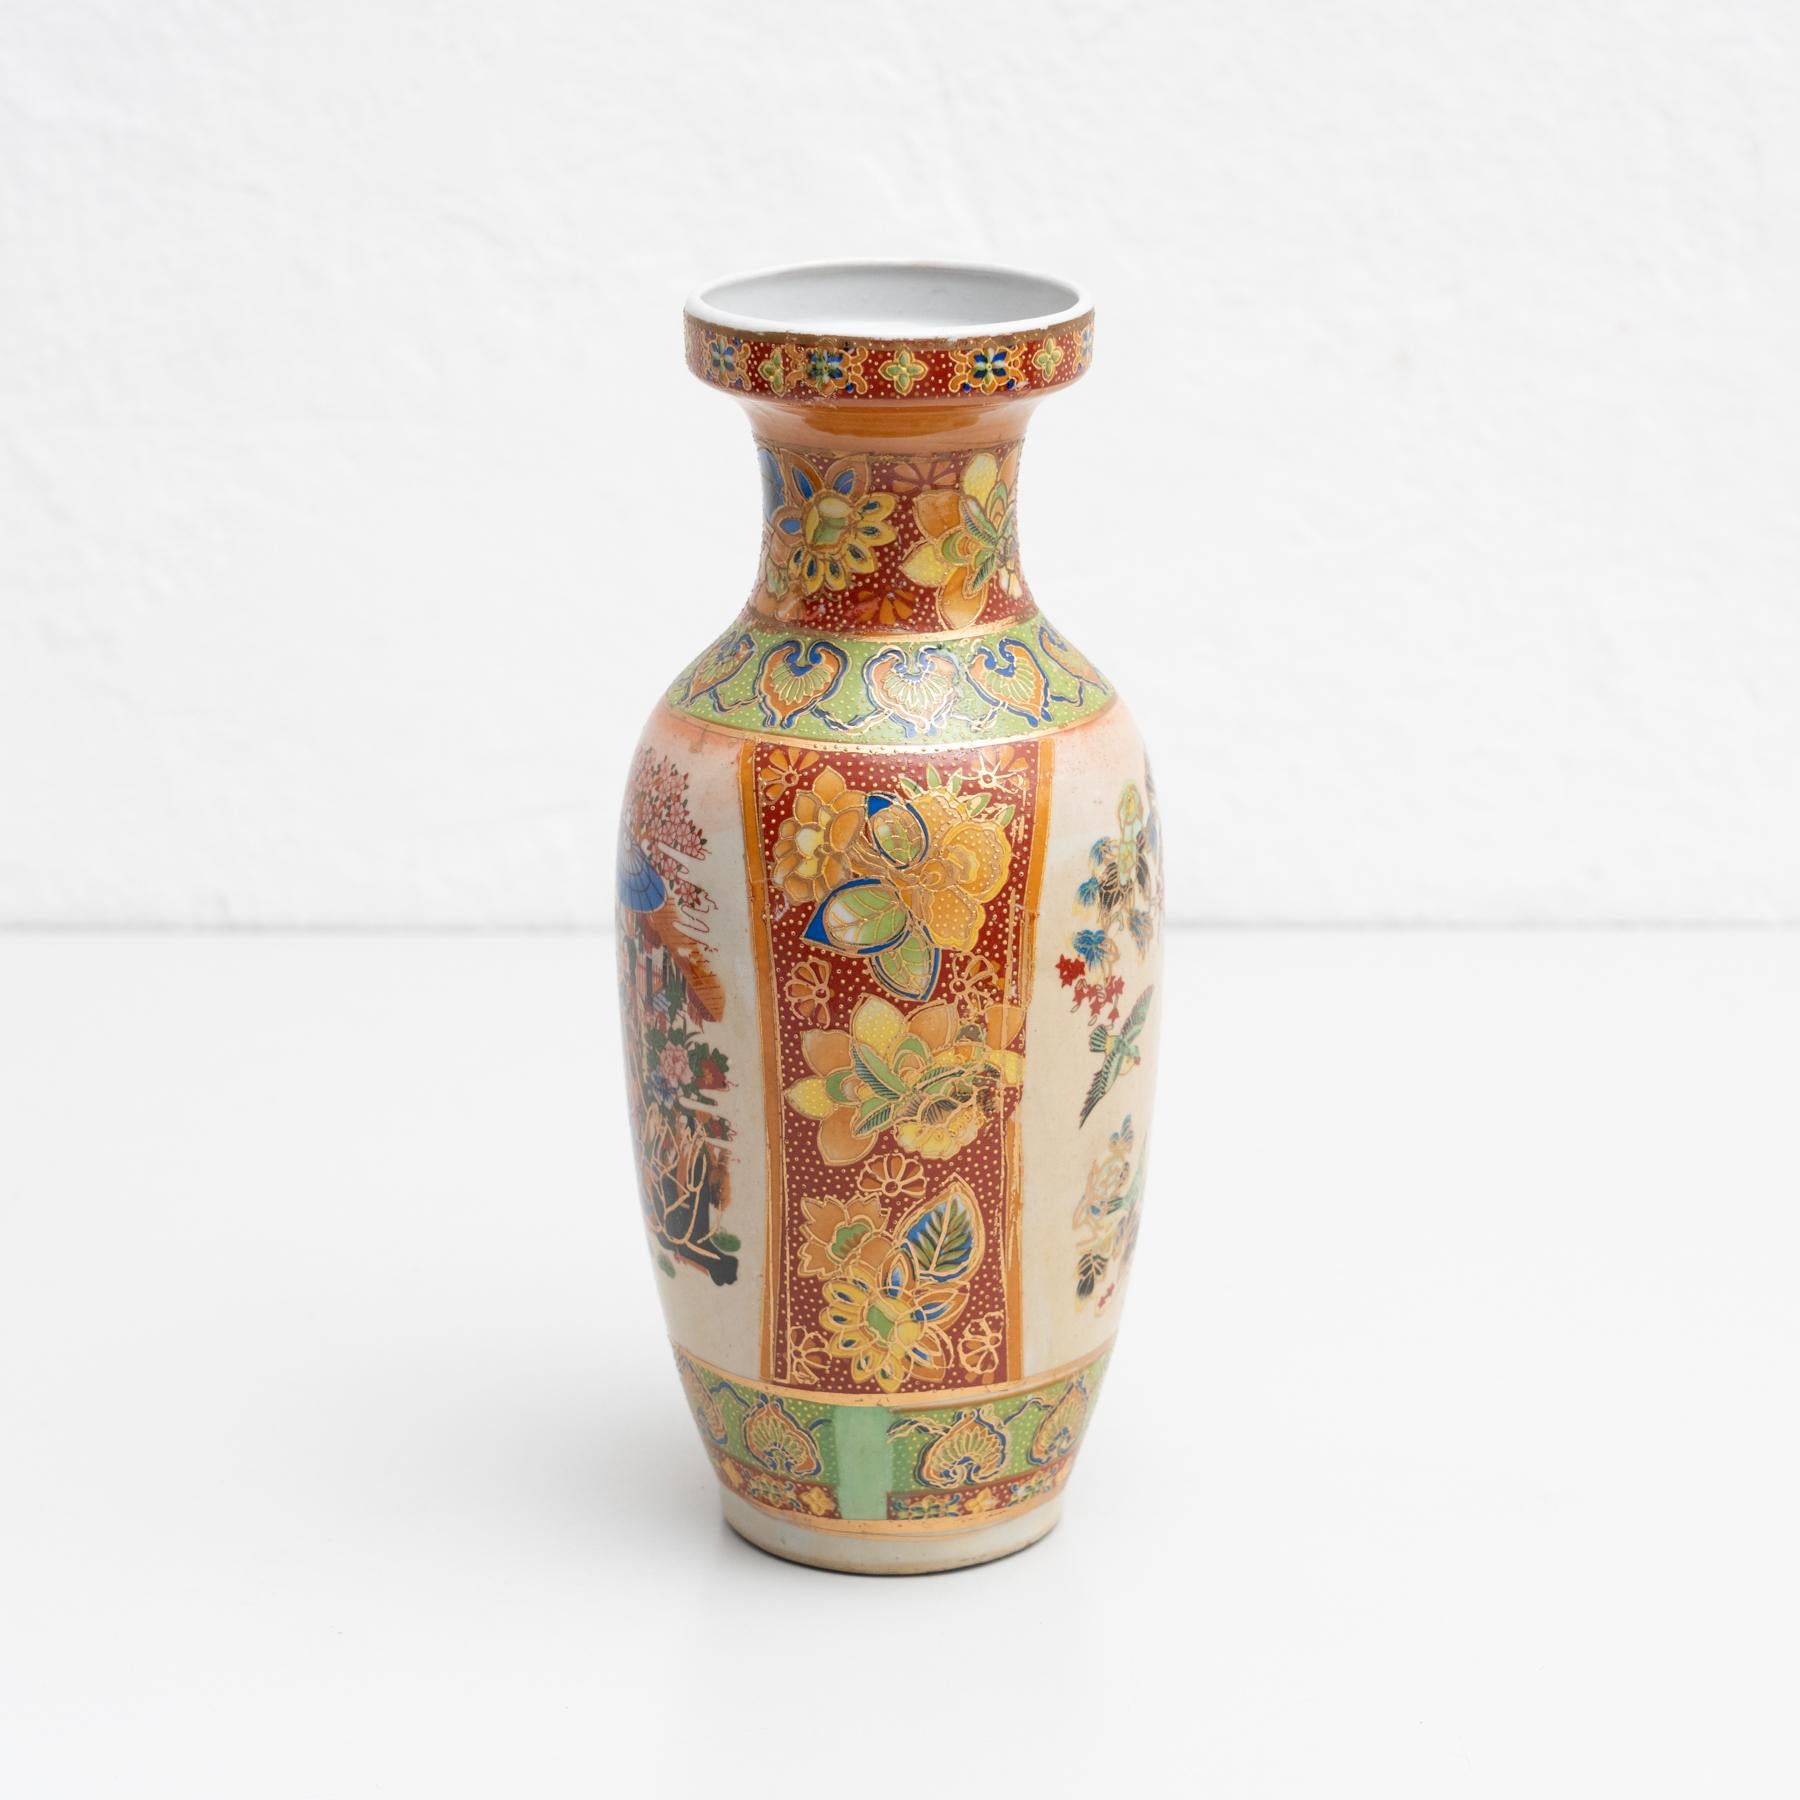 Asiatische handbemalte Keramikvase, um 1950 (Handbemalt)